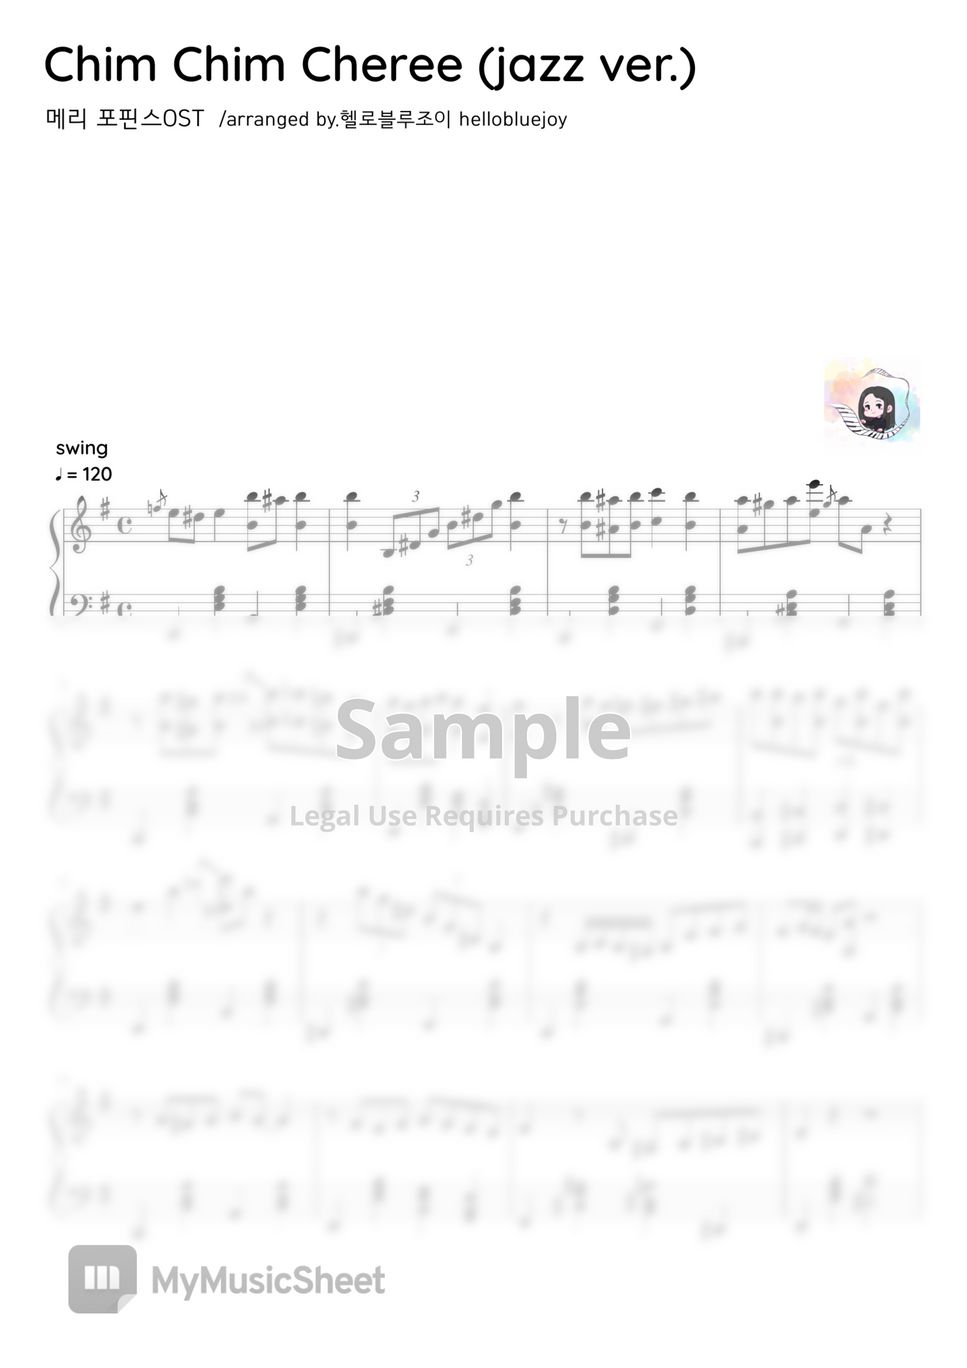 Mary Poppins OST - Chim Chim Cheree (jazz solo ver.) by hellobluejoy